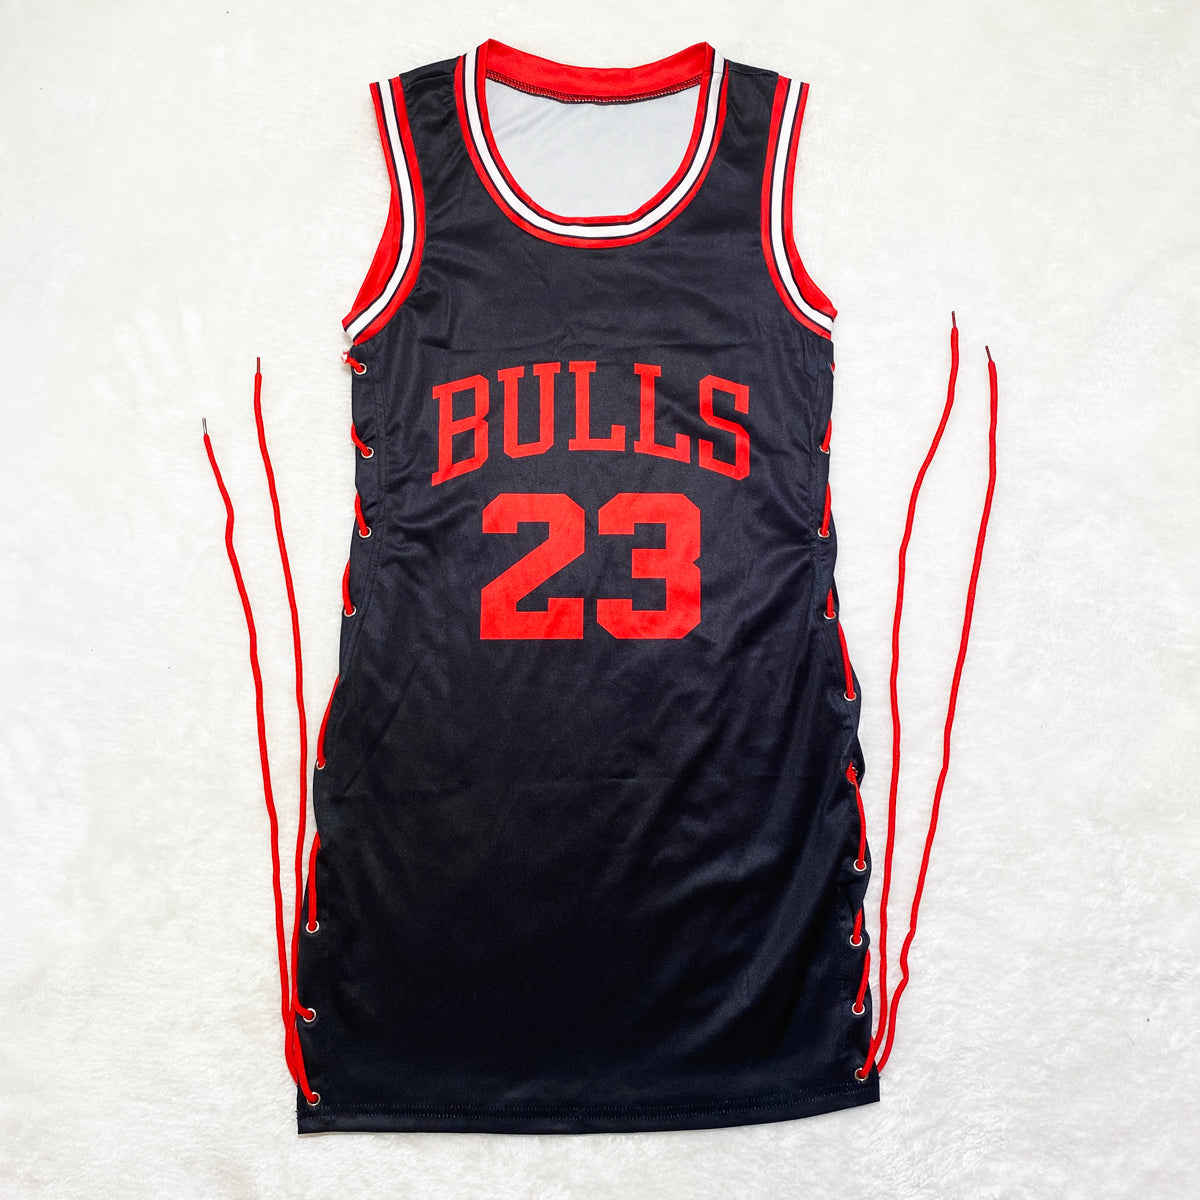 Bulls Jersey Dress - Black